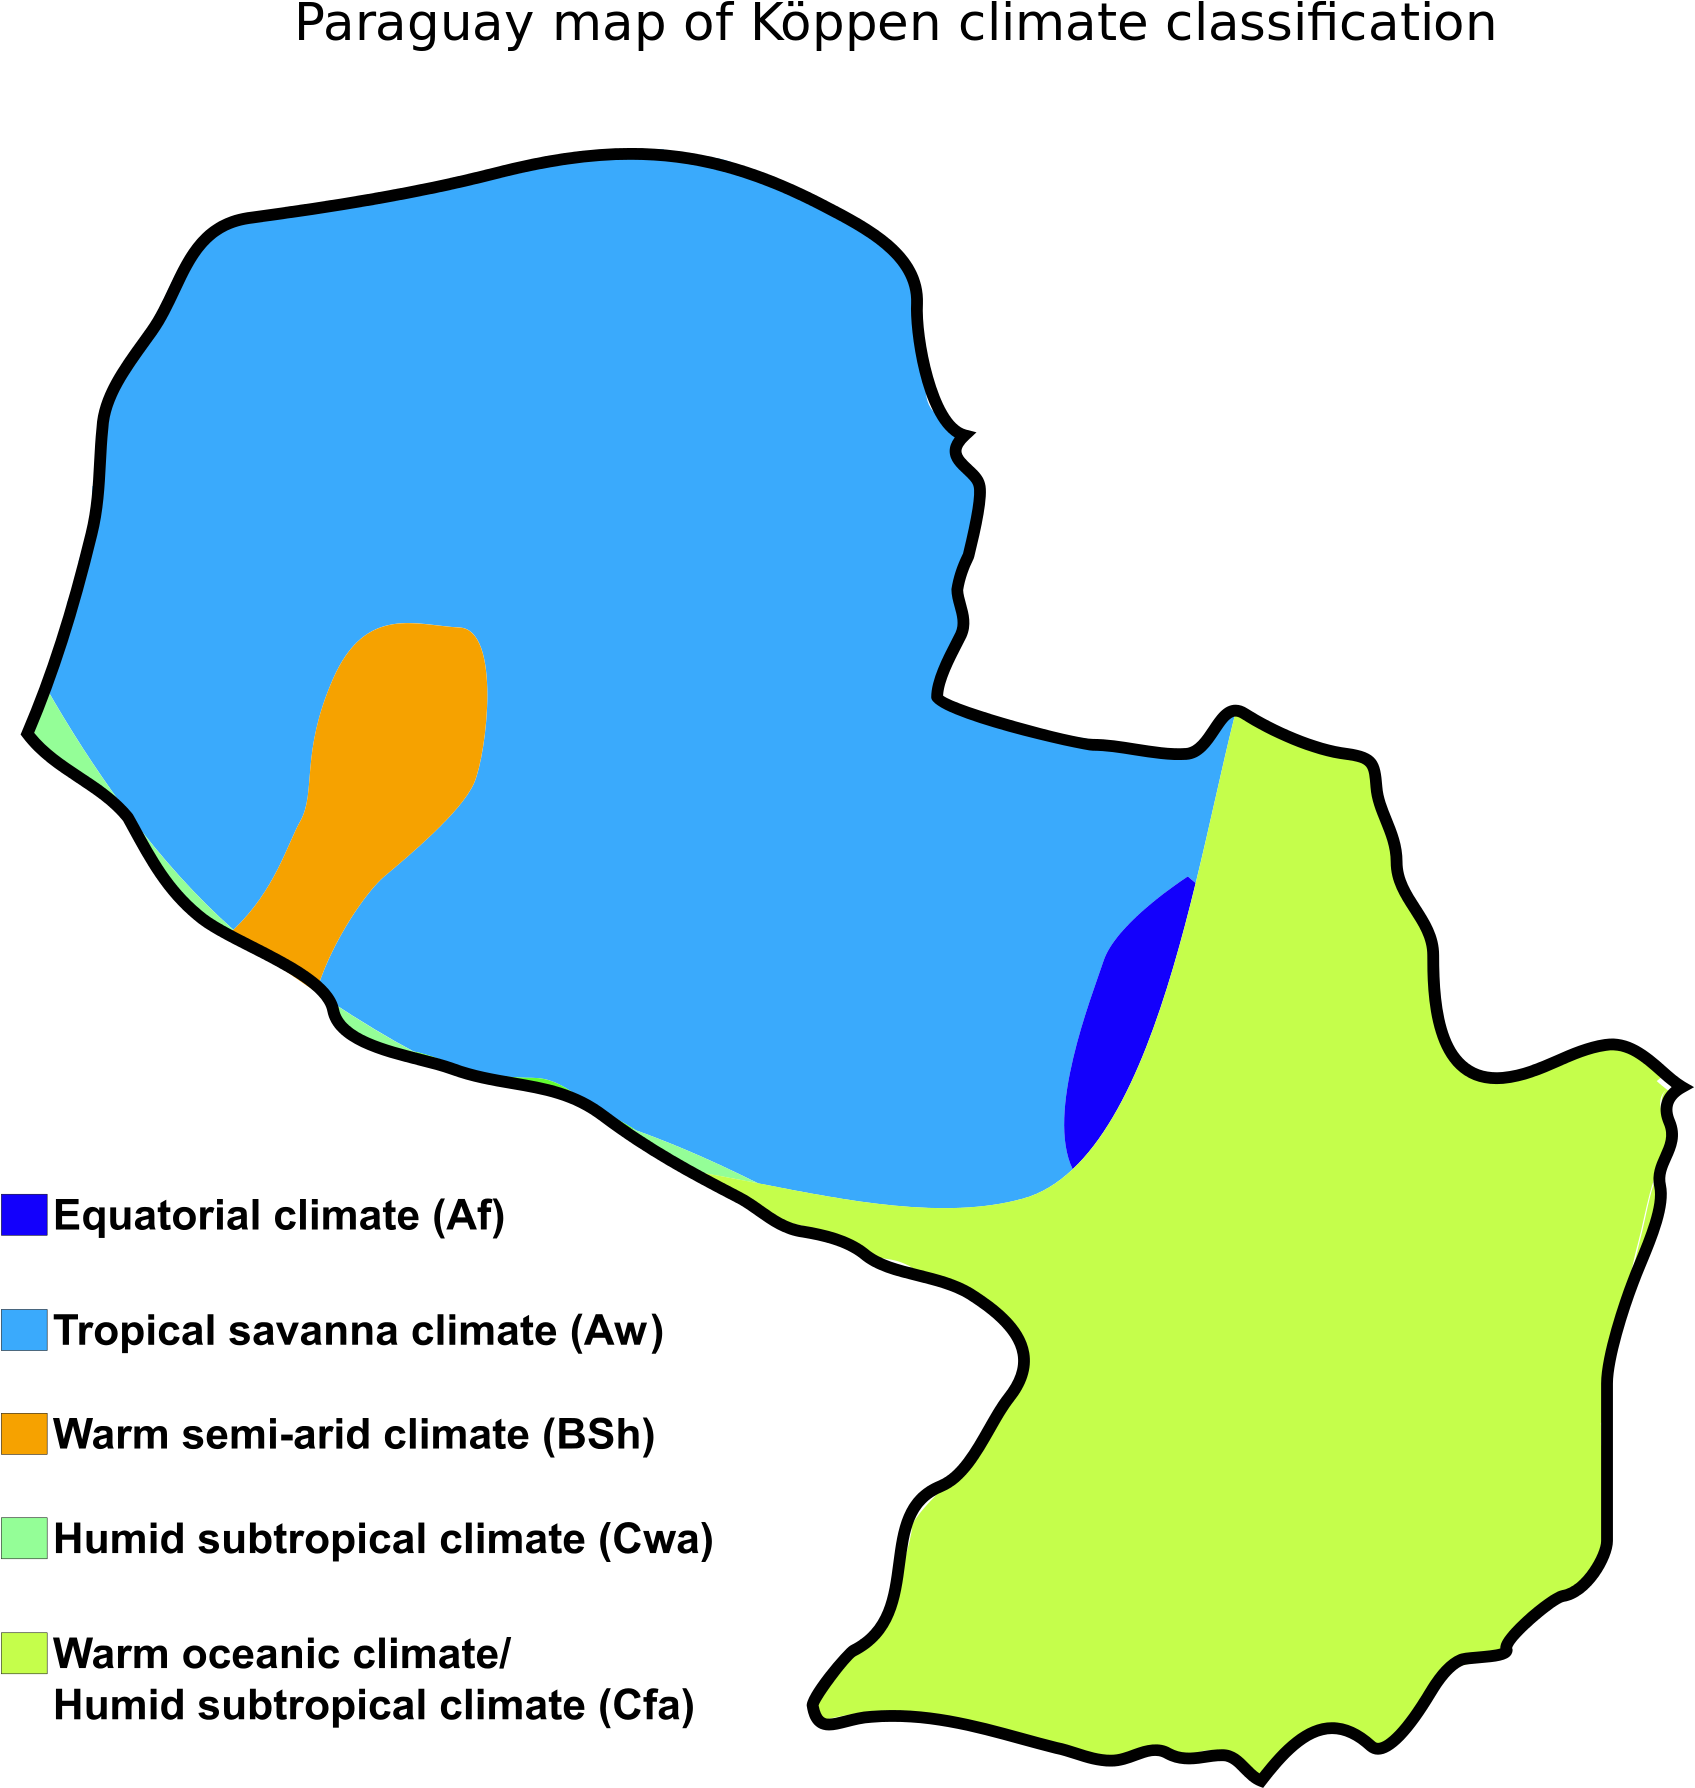 Paraguay Koppen Climate Classification Map PNG